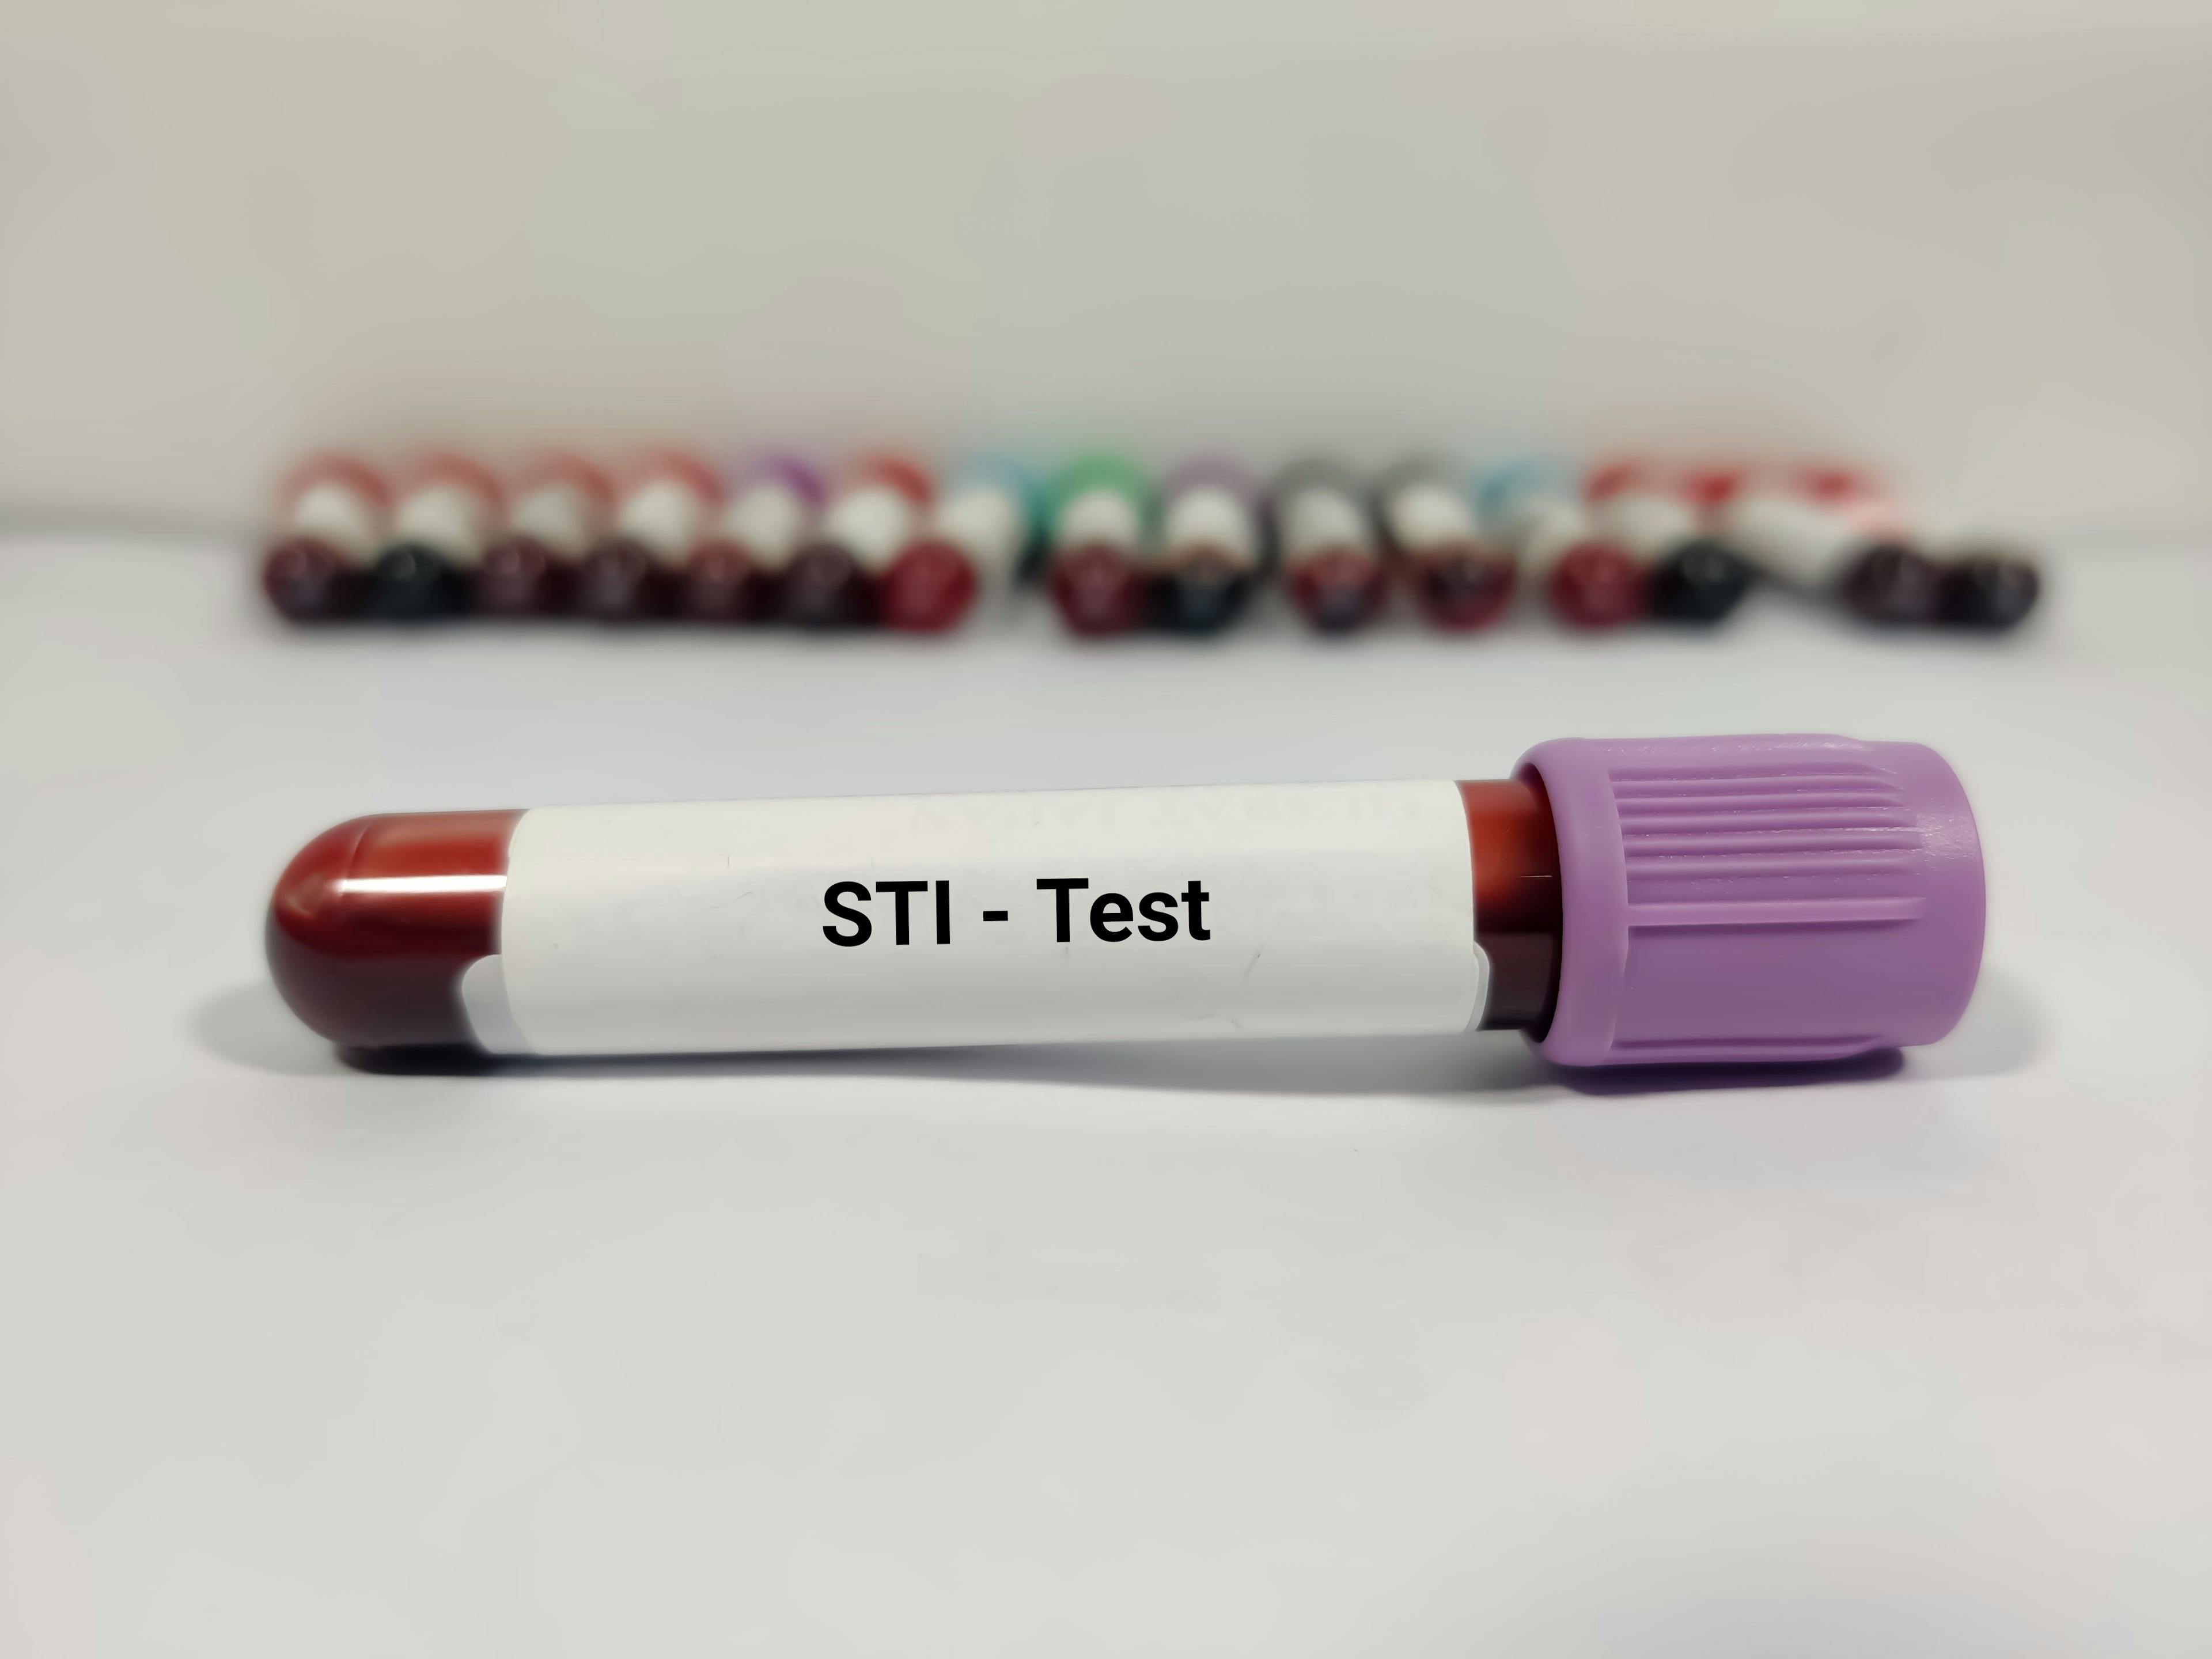 STI test | Image Credit: Innovative Creation - stock.adobe.com